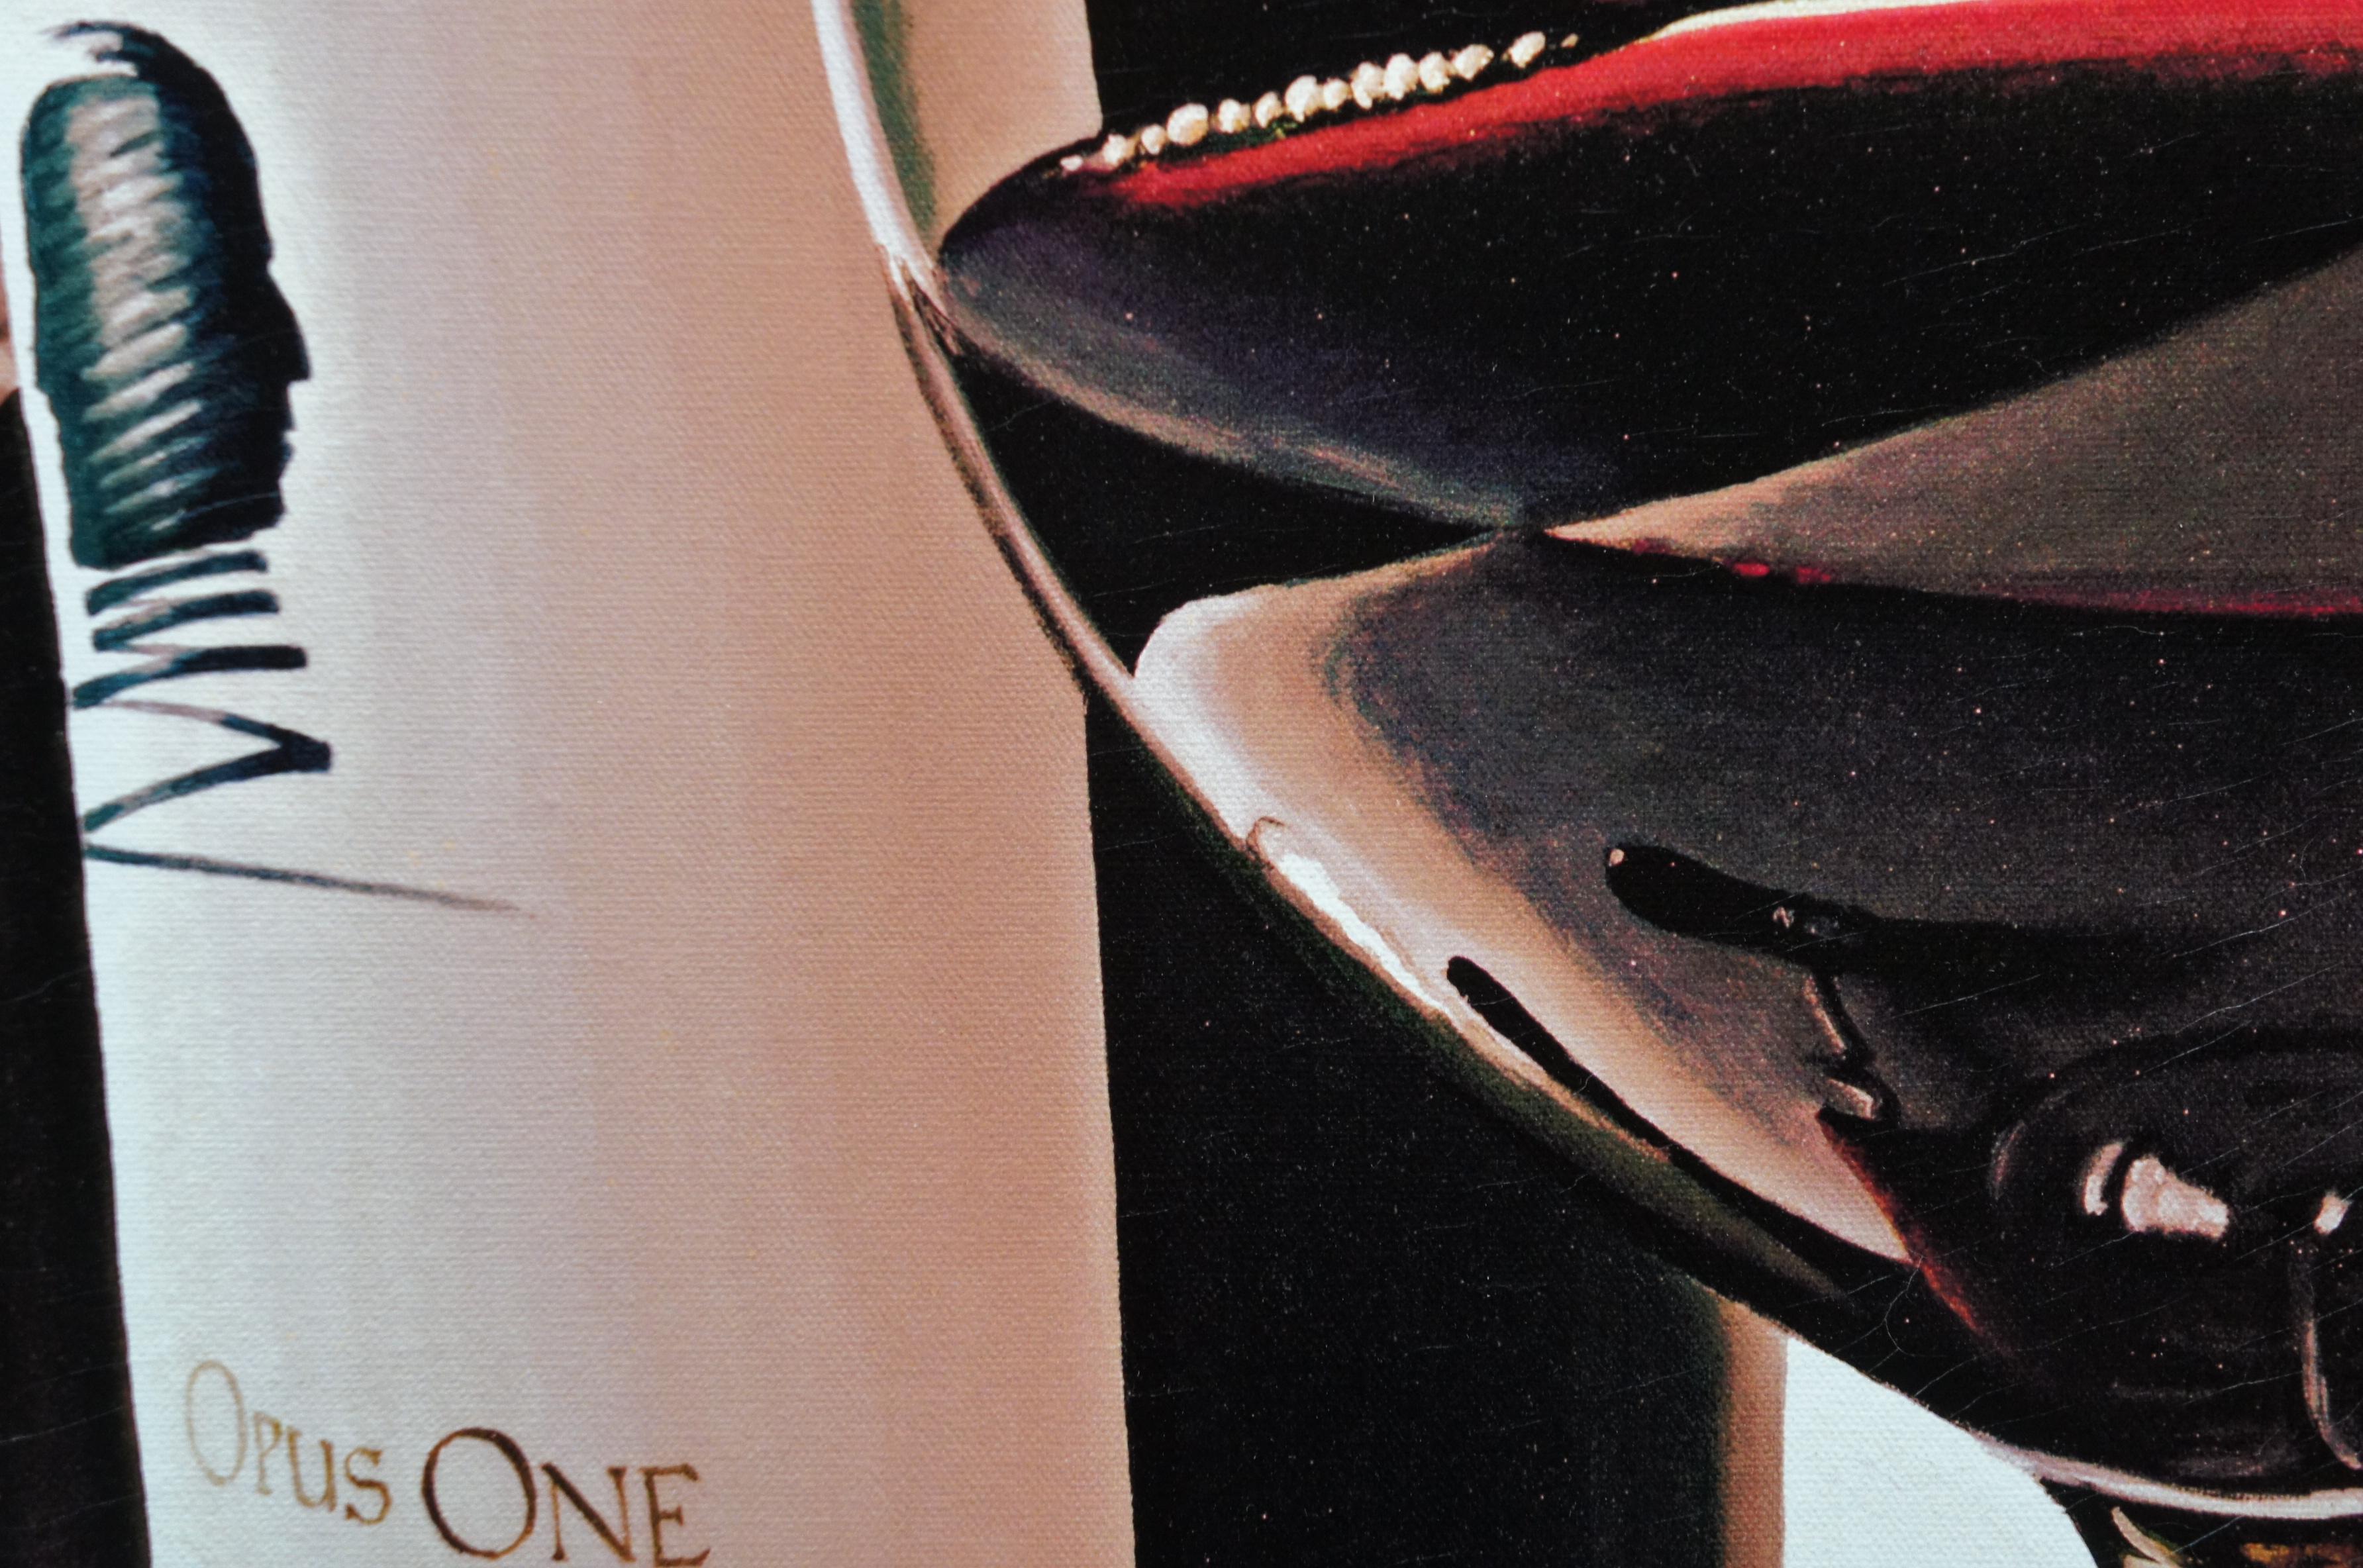 Thomas Arvid America’s Bordeaux Giclee on Canvas Opus One Wine 3